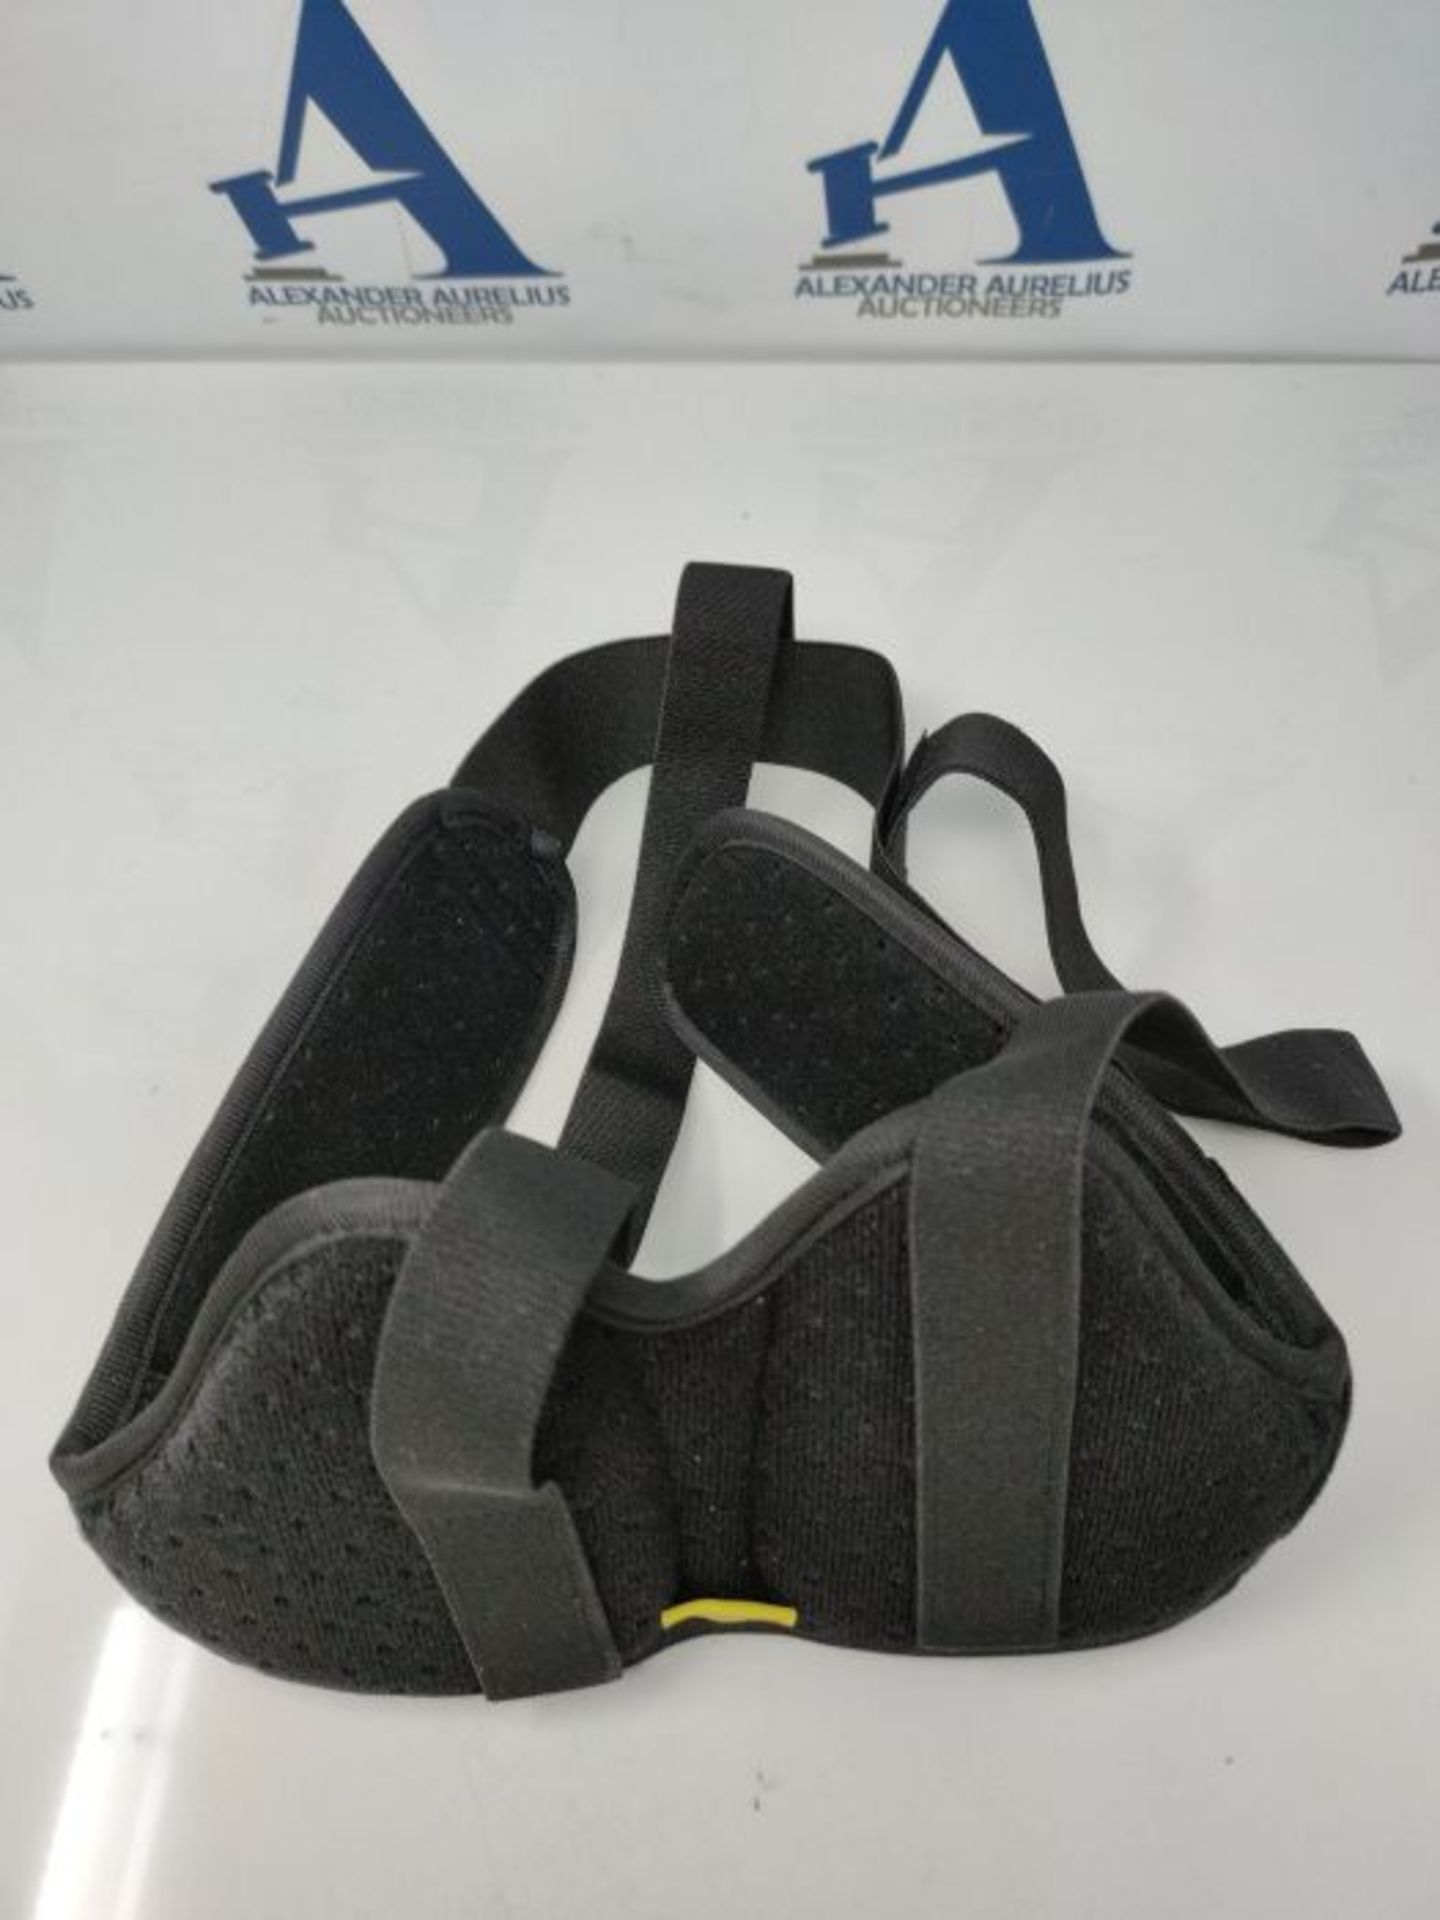 Tenbon Hernia Belt for Men and Women Flexible Adjustable Inguinal Groin Hernia Belt Su - Image 2 of 2